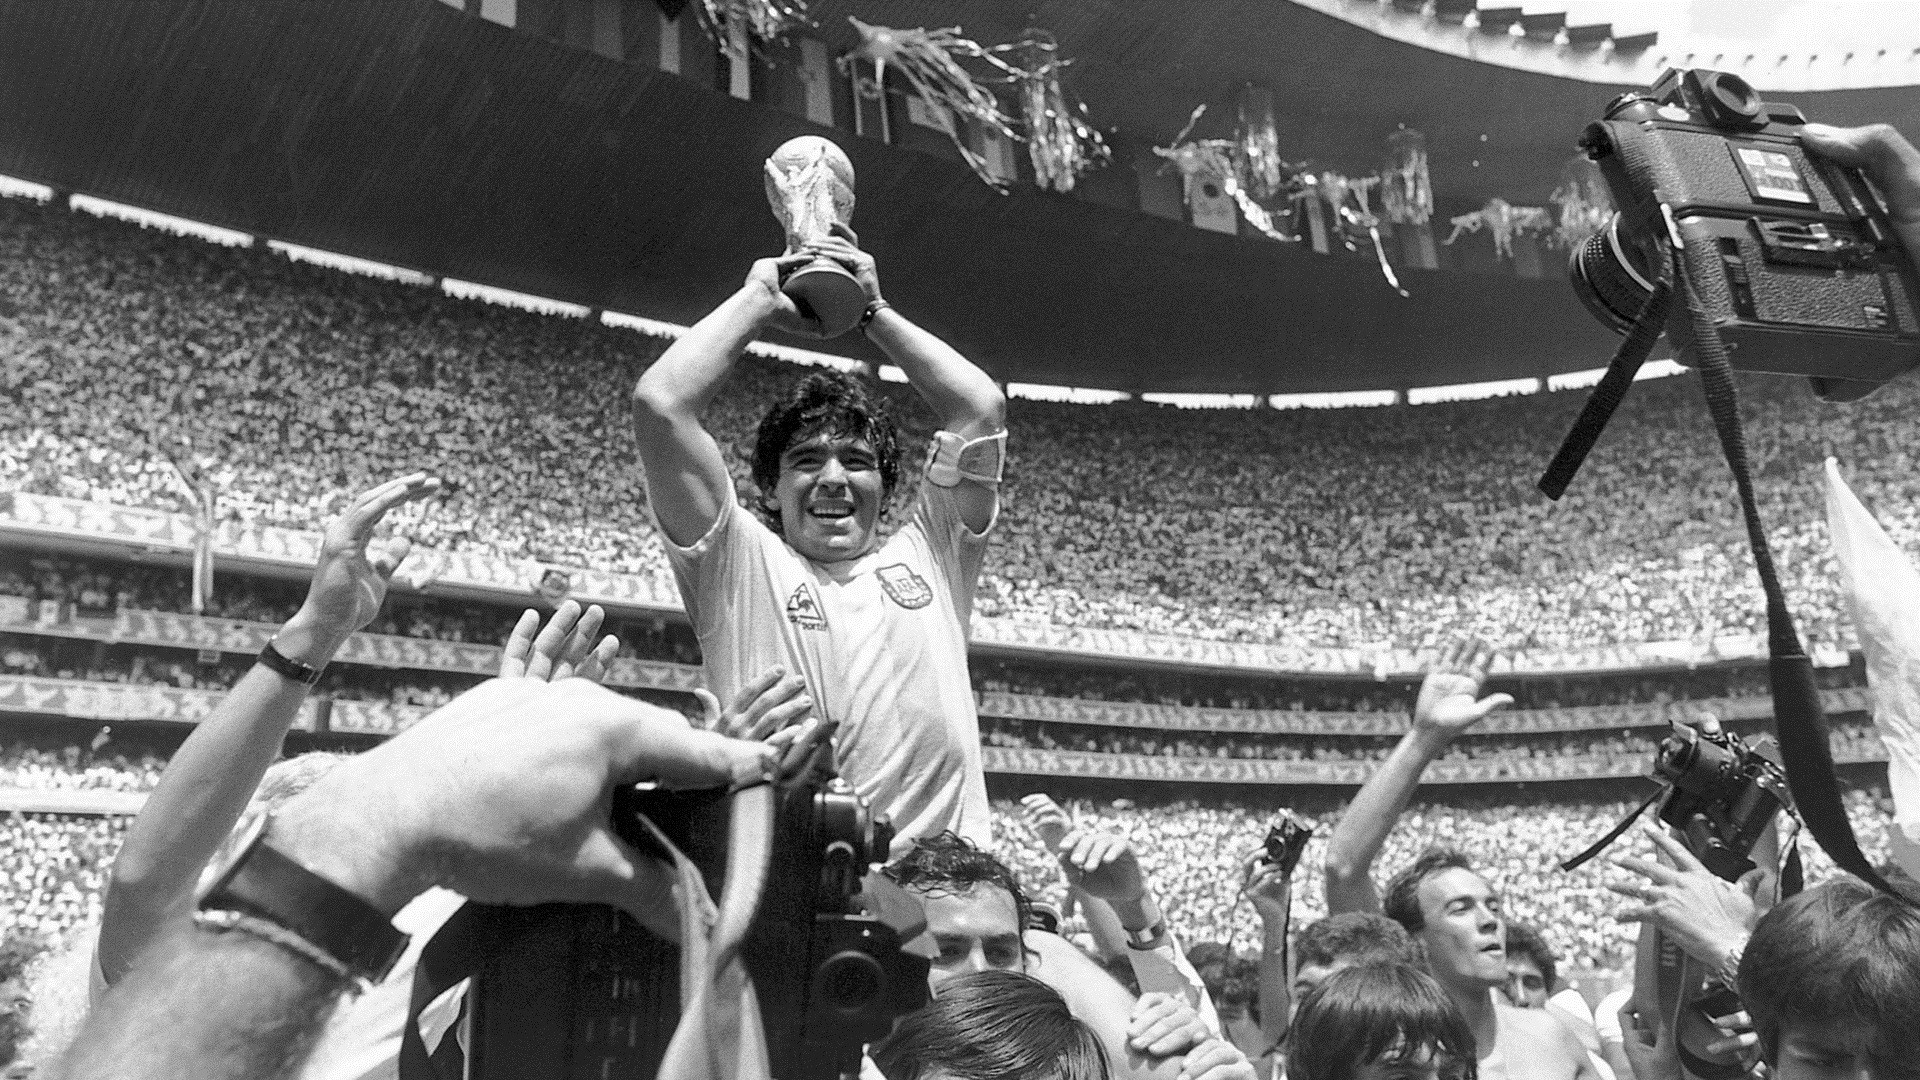 People 1920x1080 Argentina soccer footballers monochrome winner sport Diego Maradona stadium men